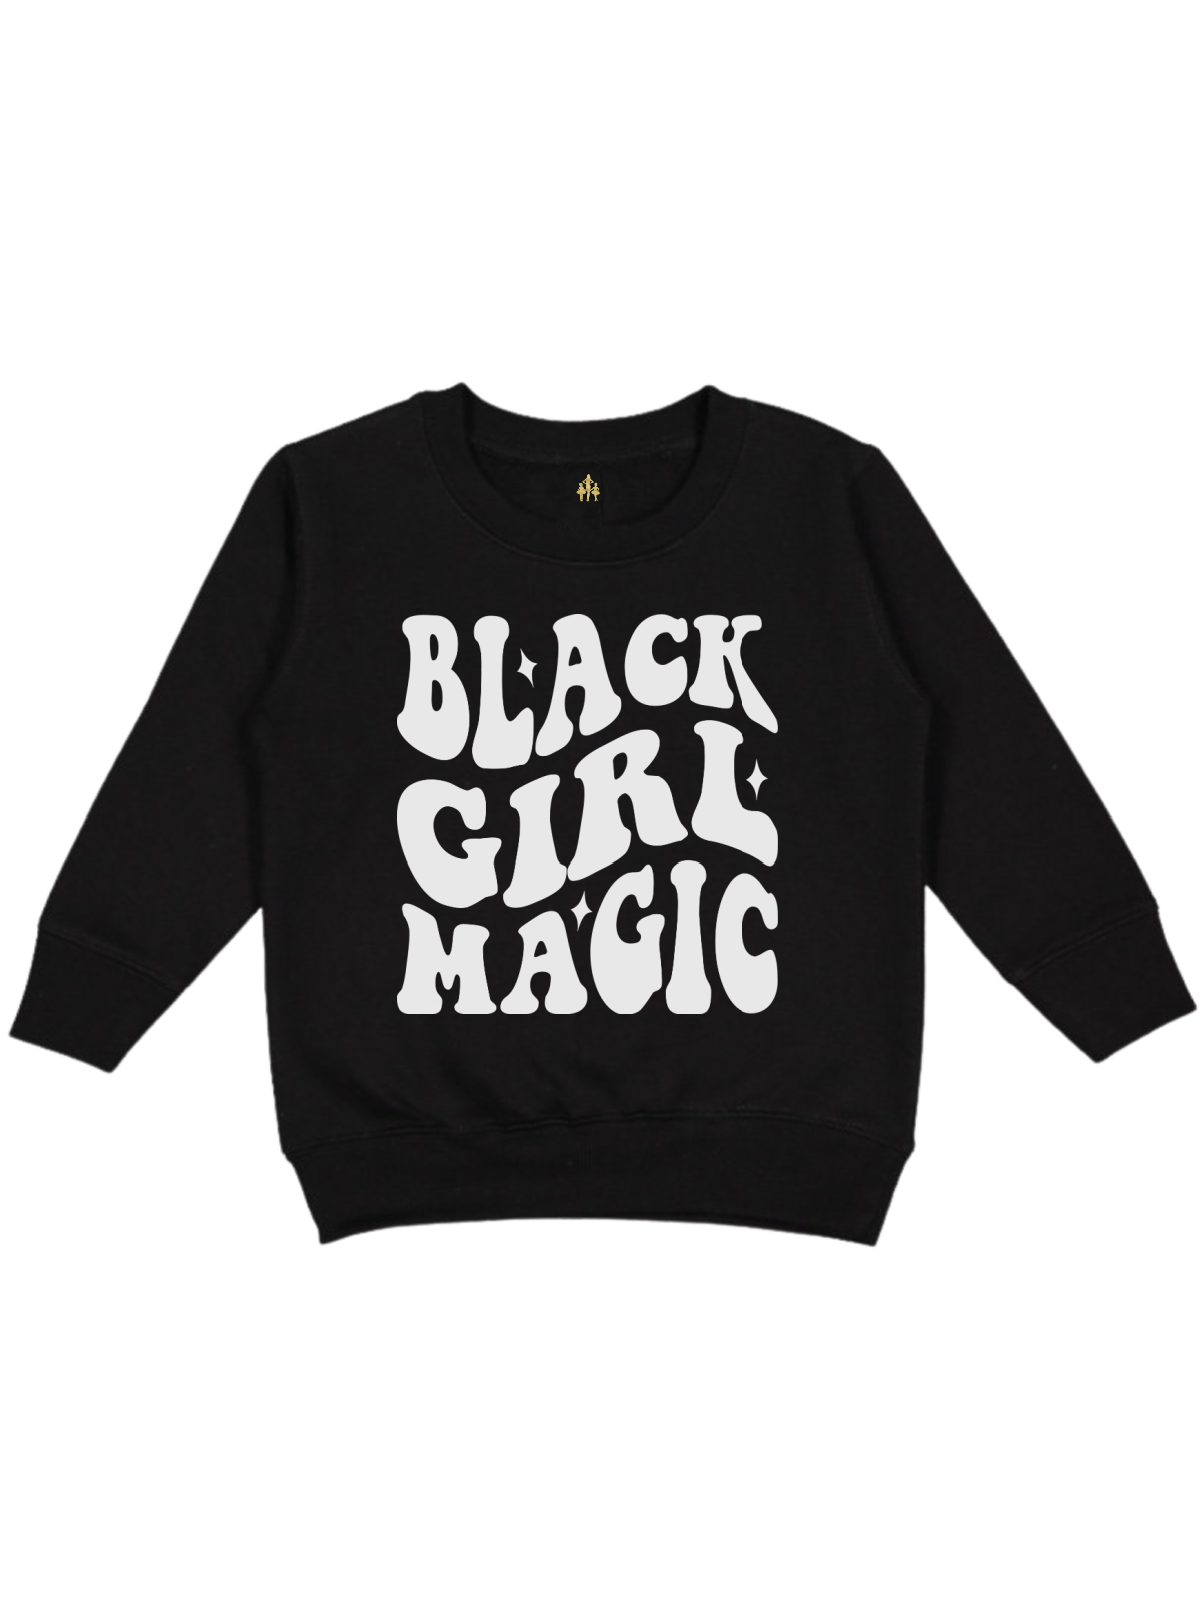 Retro Black Girl Magic Sweatshirt for Girls